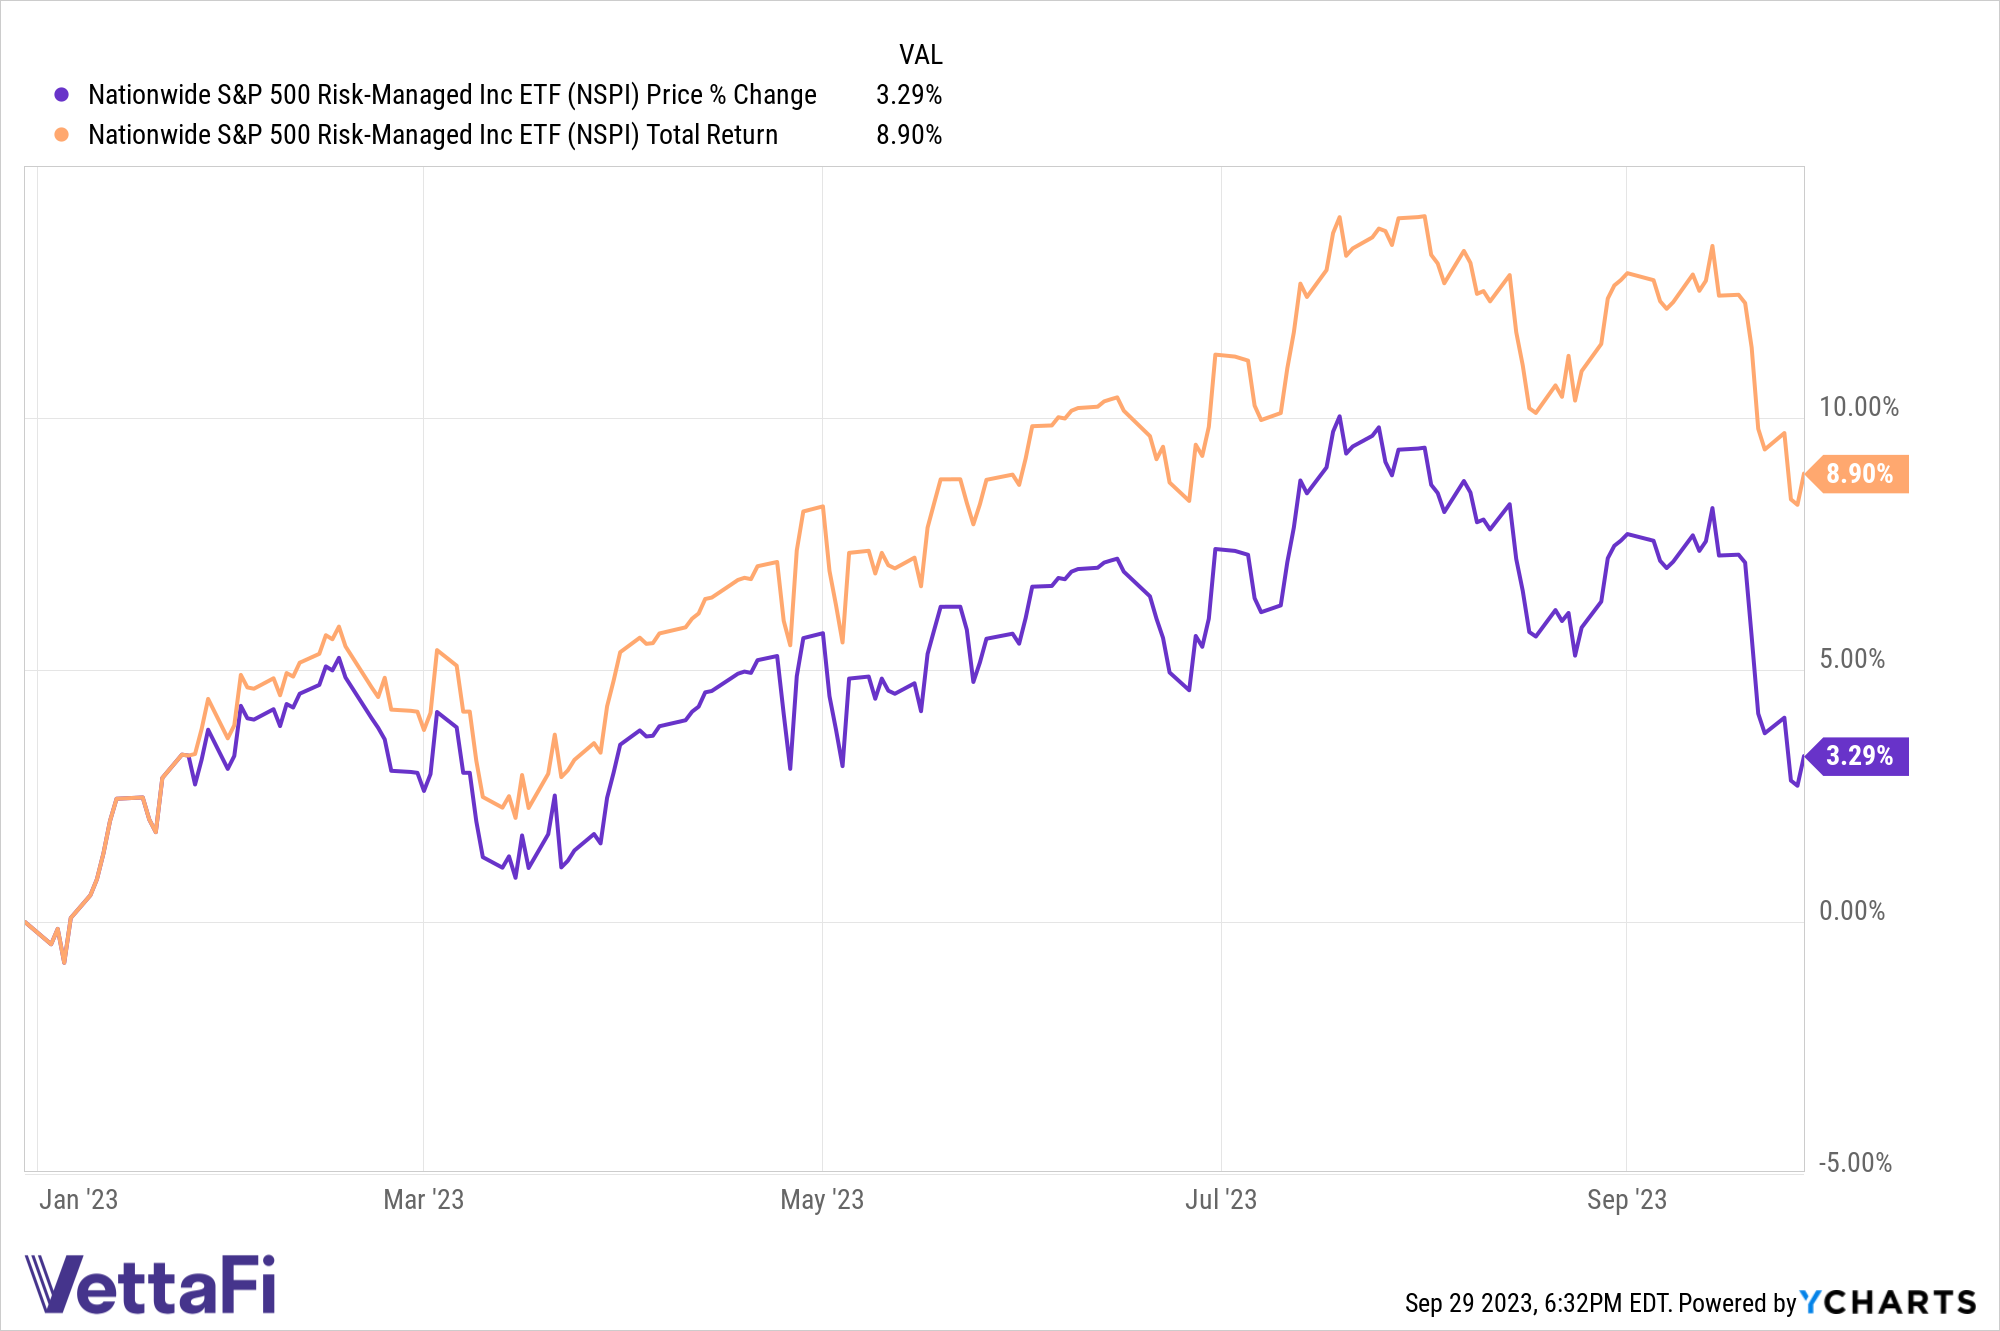 NTKI price chart and total returns chart YTD as of 09/28/23.